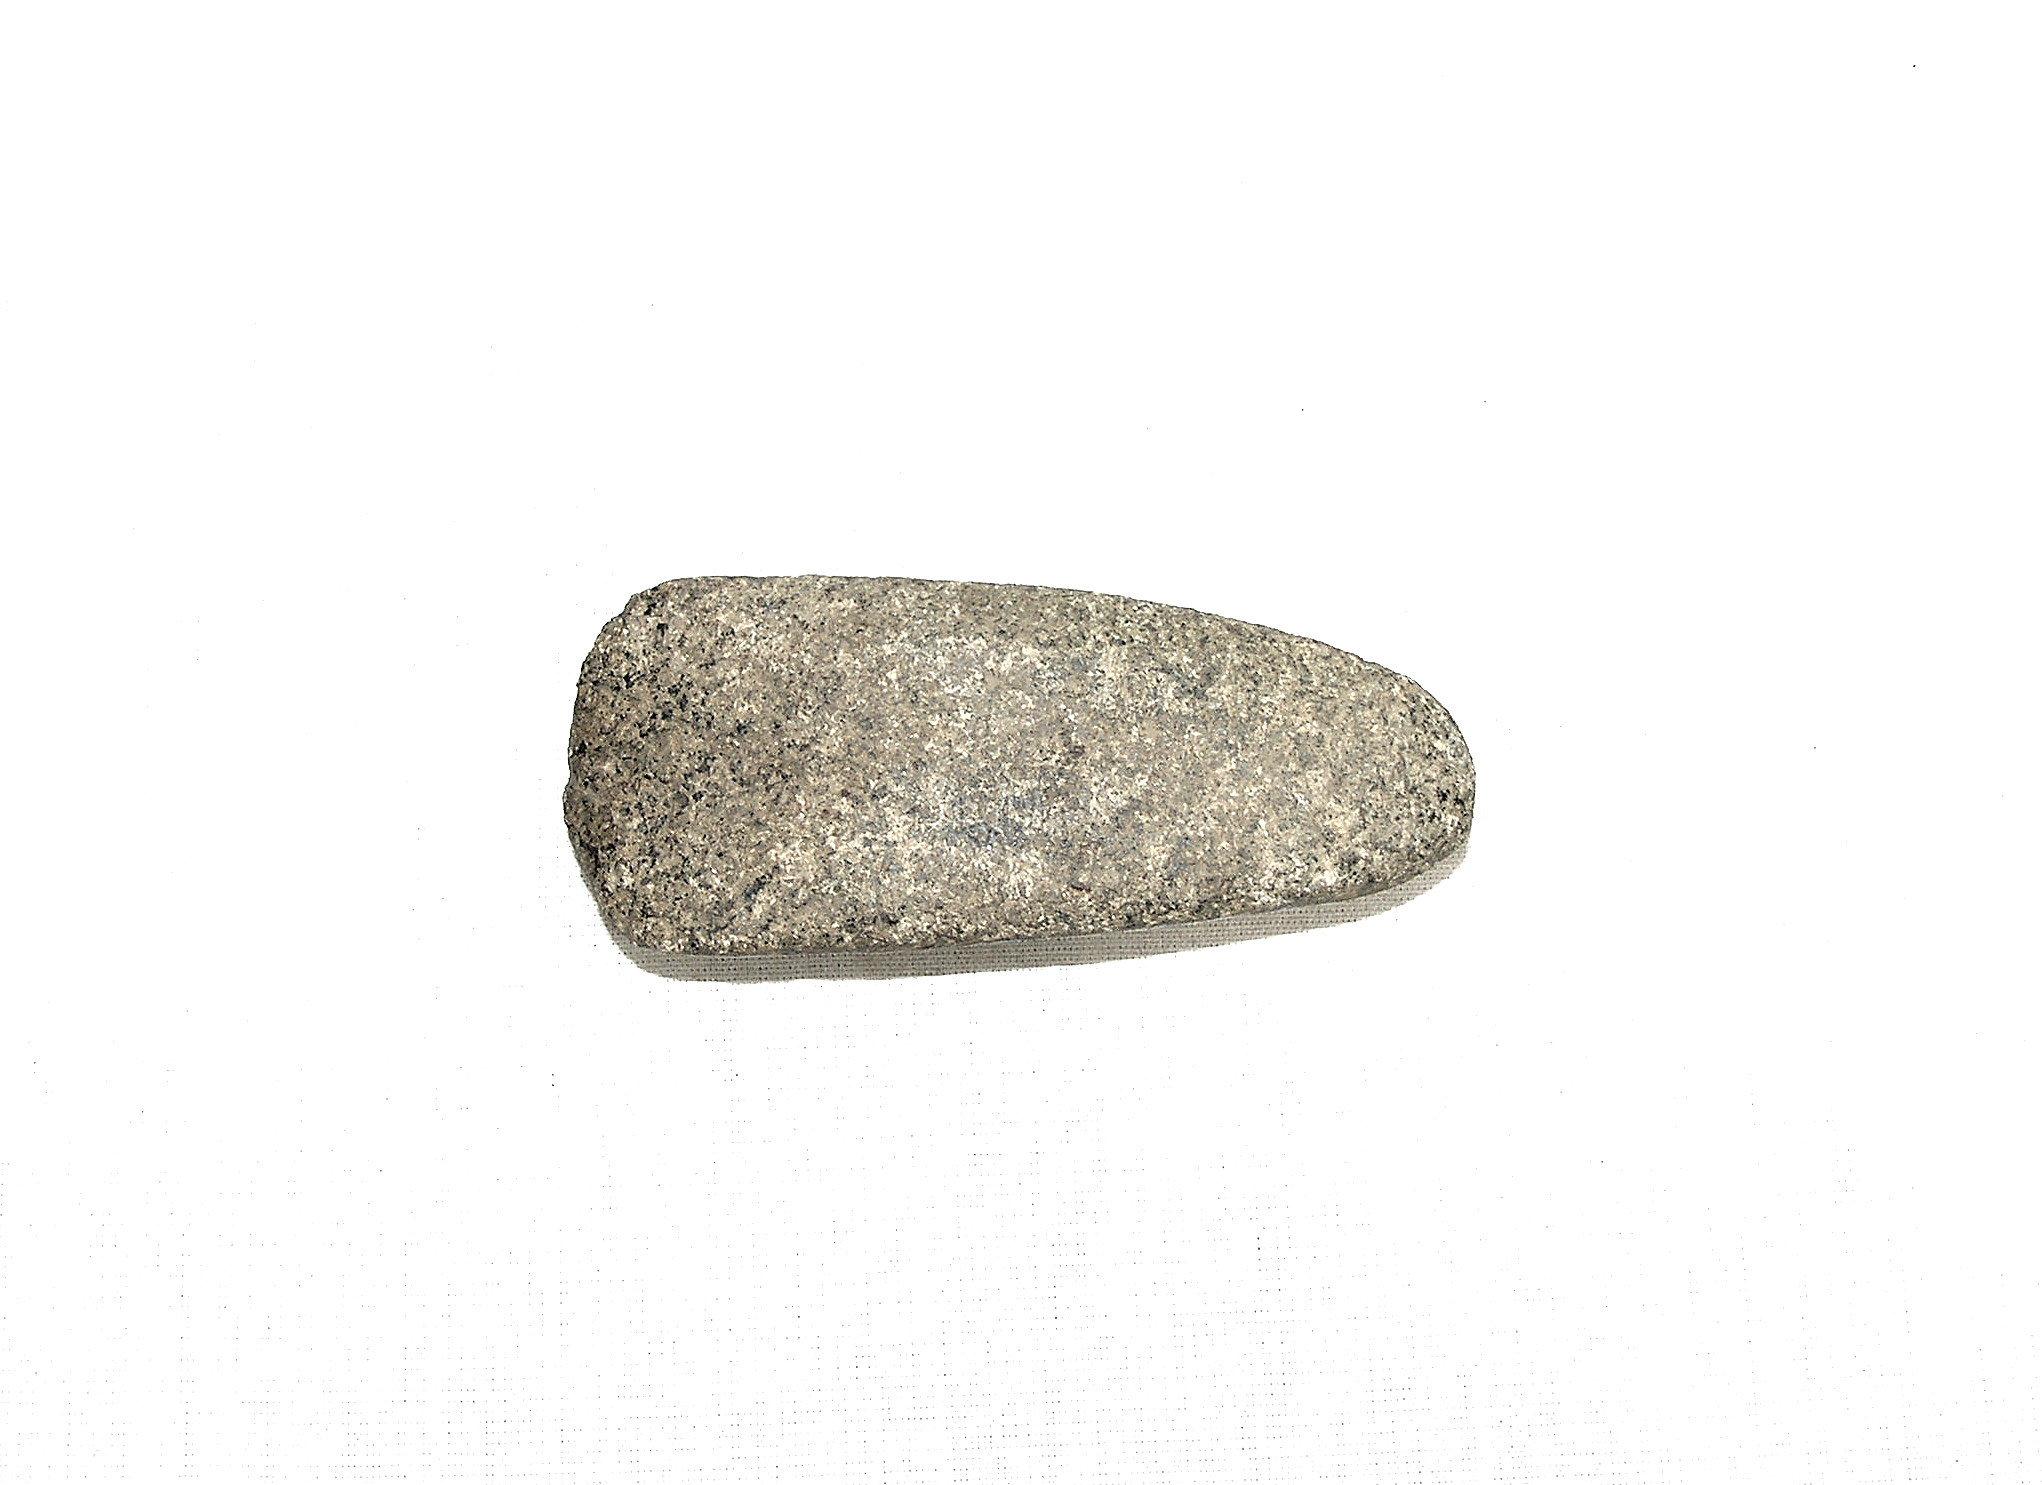 Vintage American Indian Stone Celt.   4" x  2"